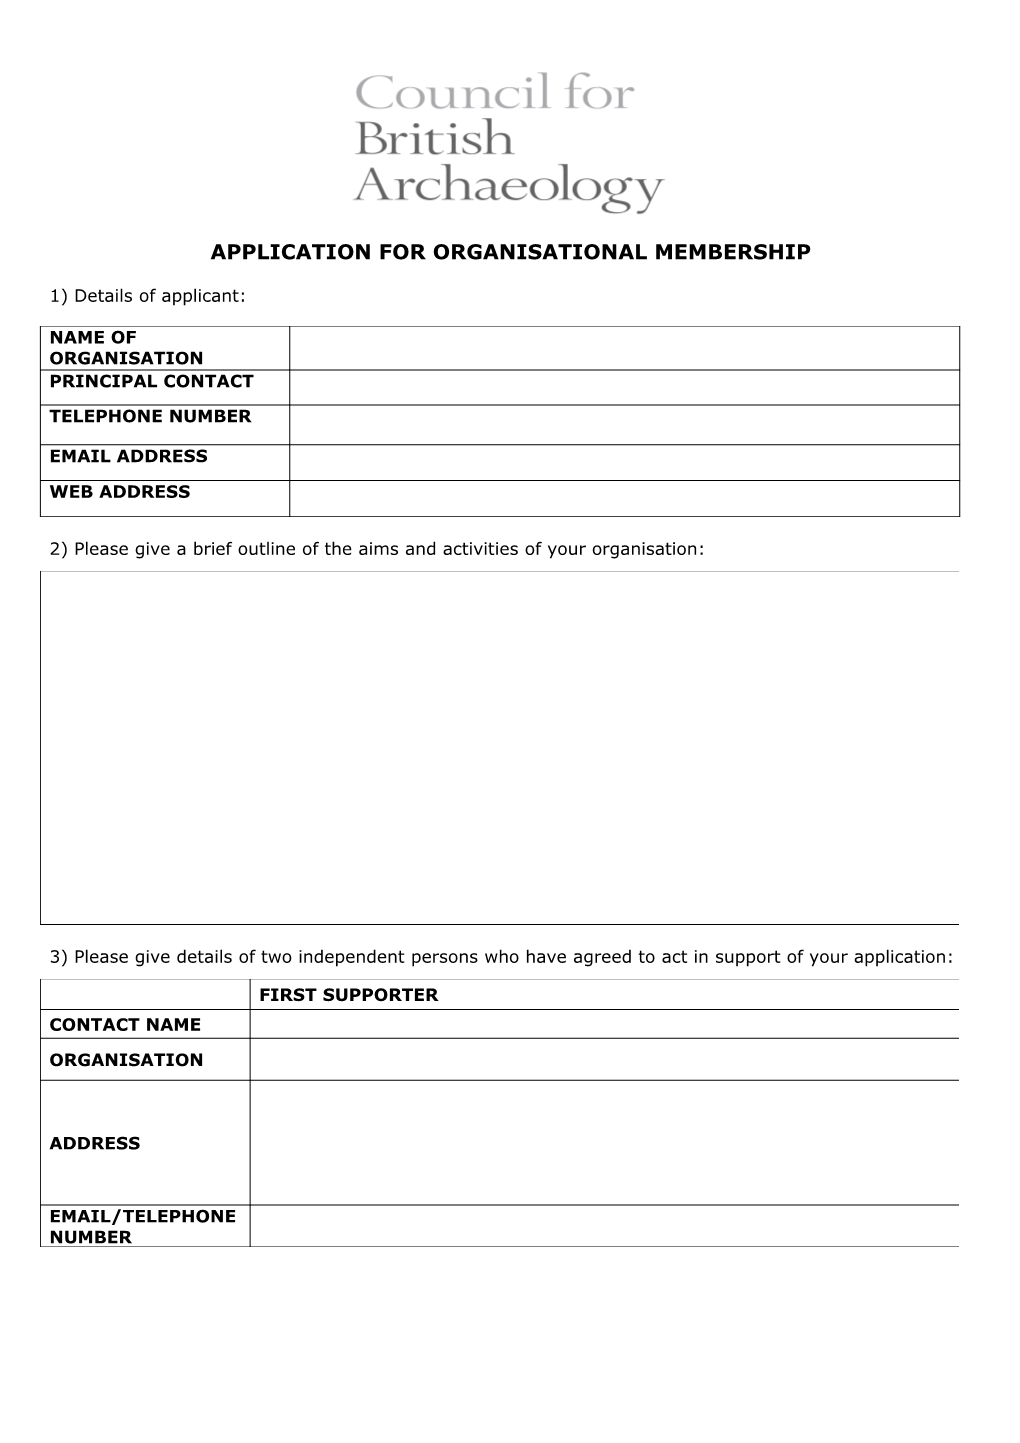 Application for Organisational Membership